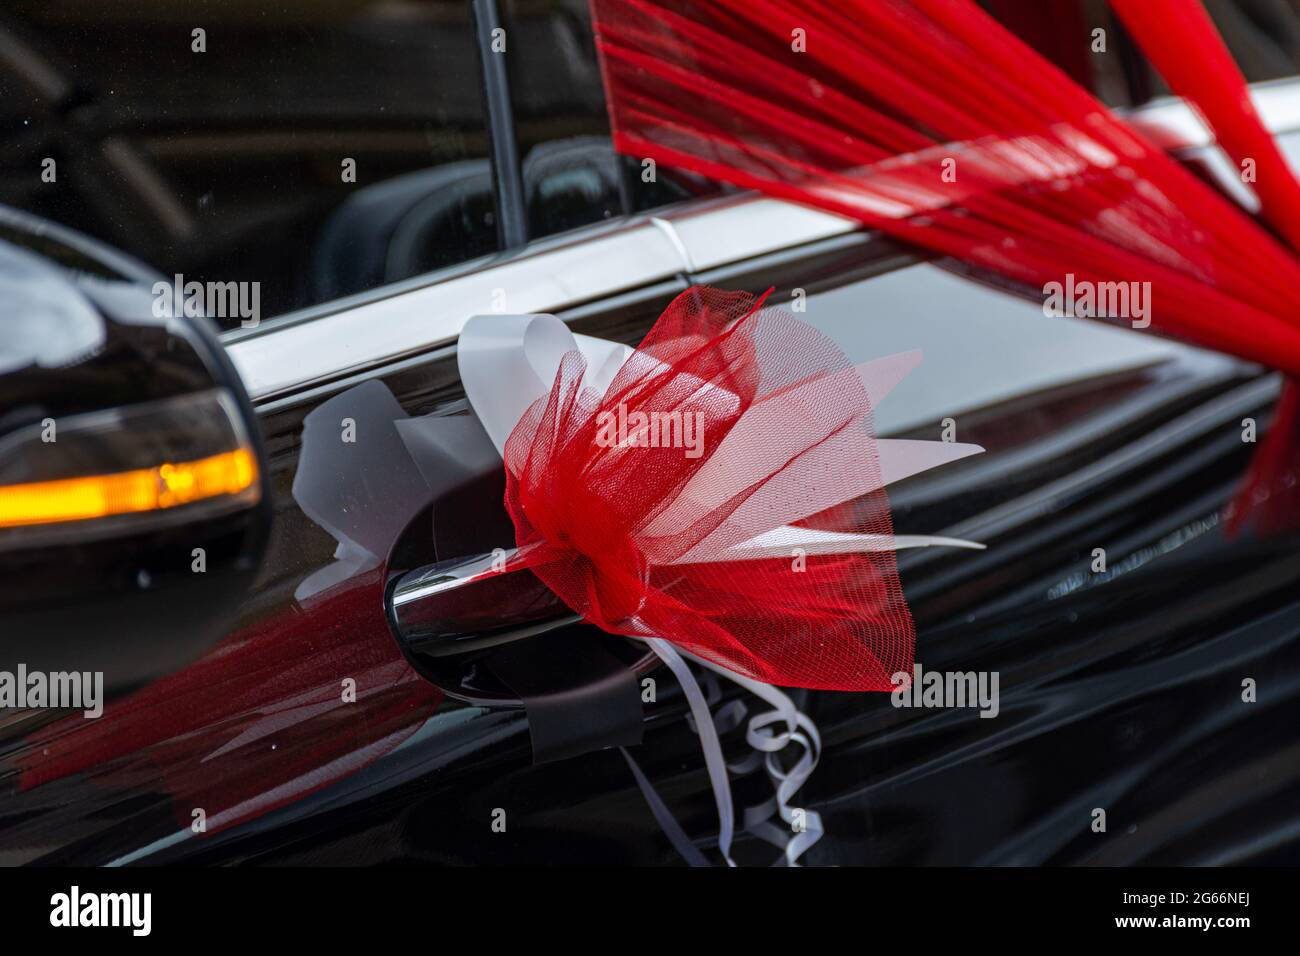 29+ Thousand Car Ribbon Royalty-Free Images, Stock Photos